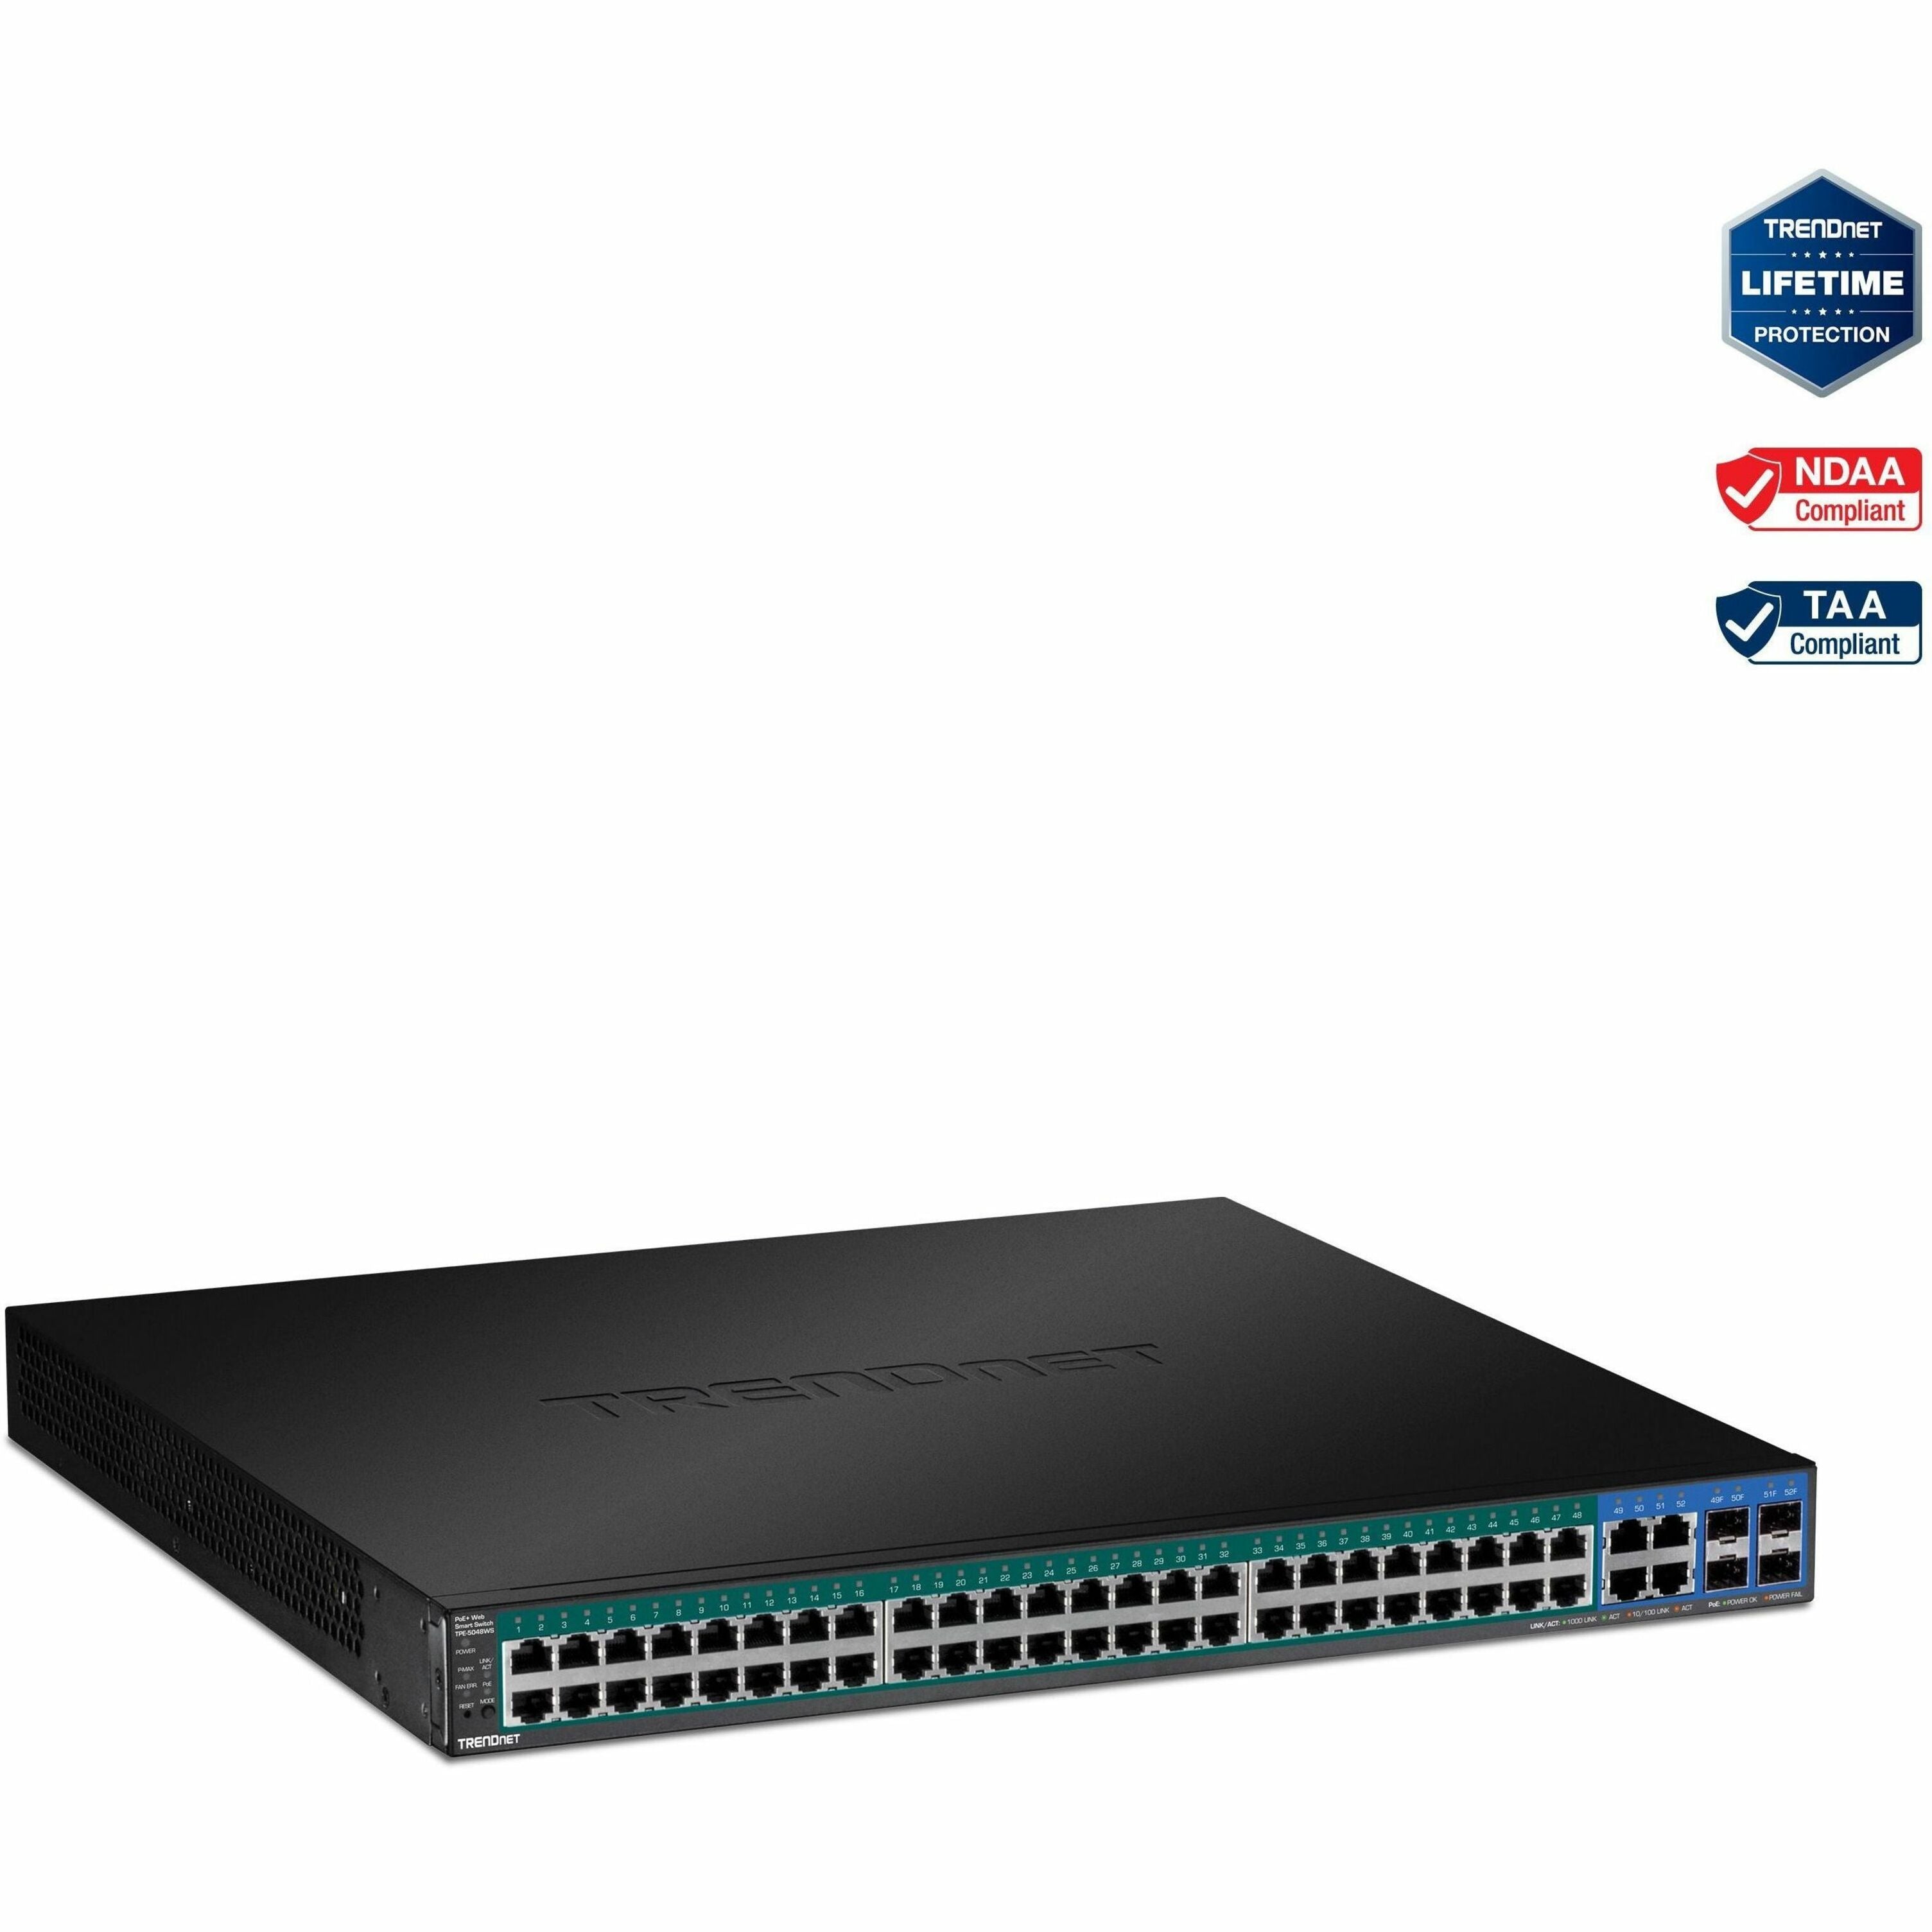 TRENDnet TPE-5048WS 52-Port Gigabit Web Smart PoE+ Switch